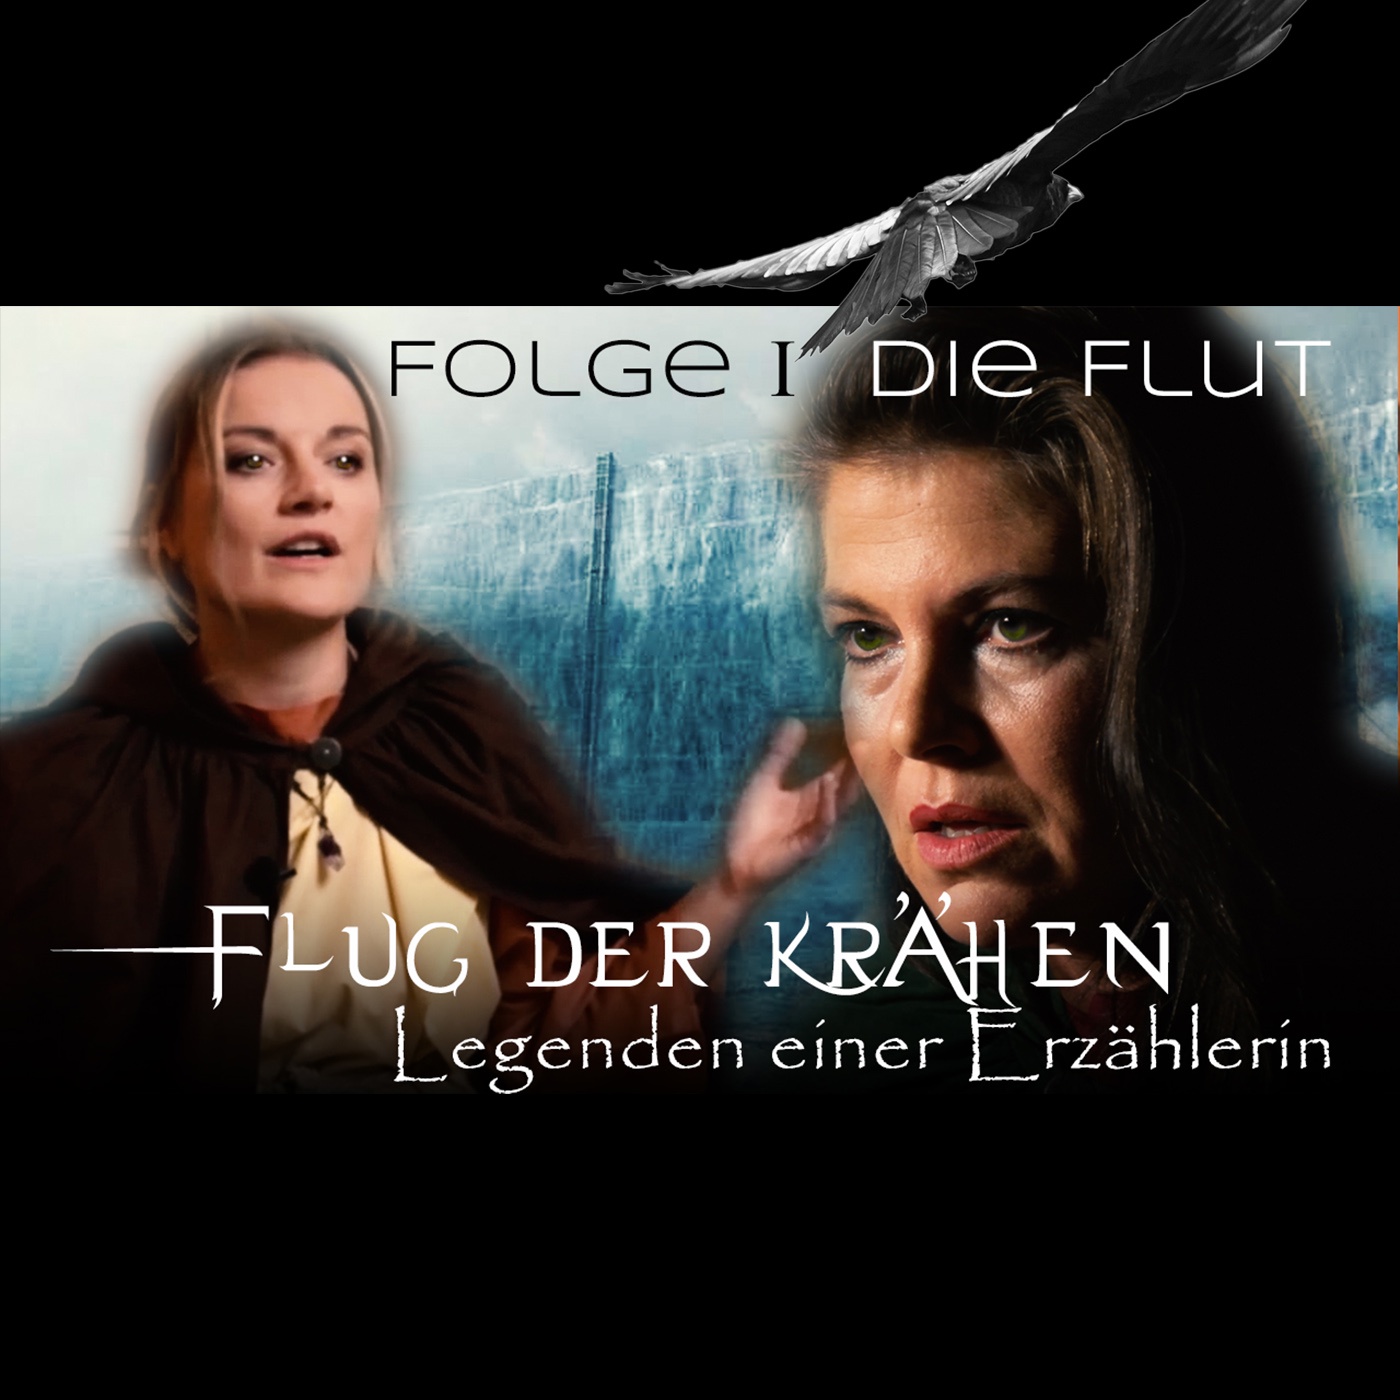 Die Flut (Season 1 Folge 1)